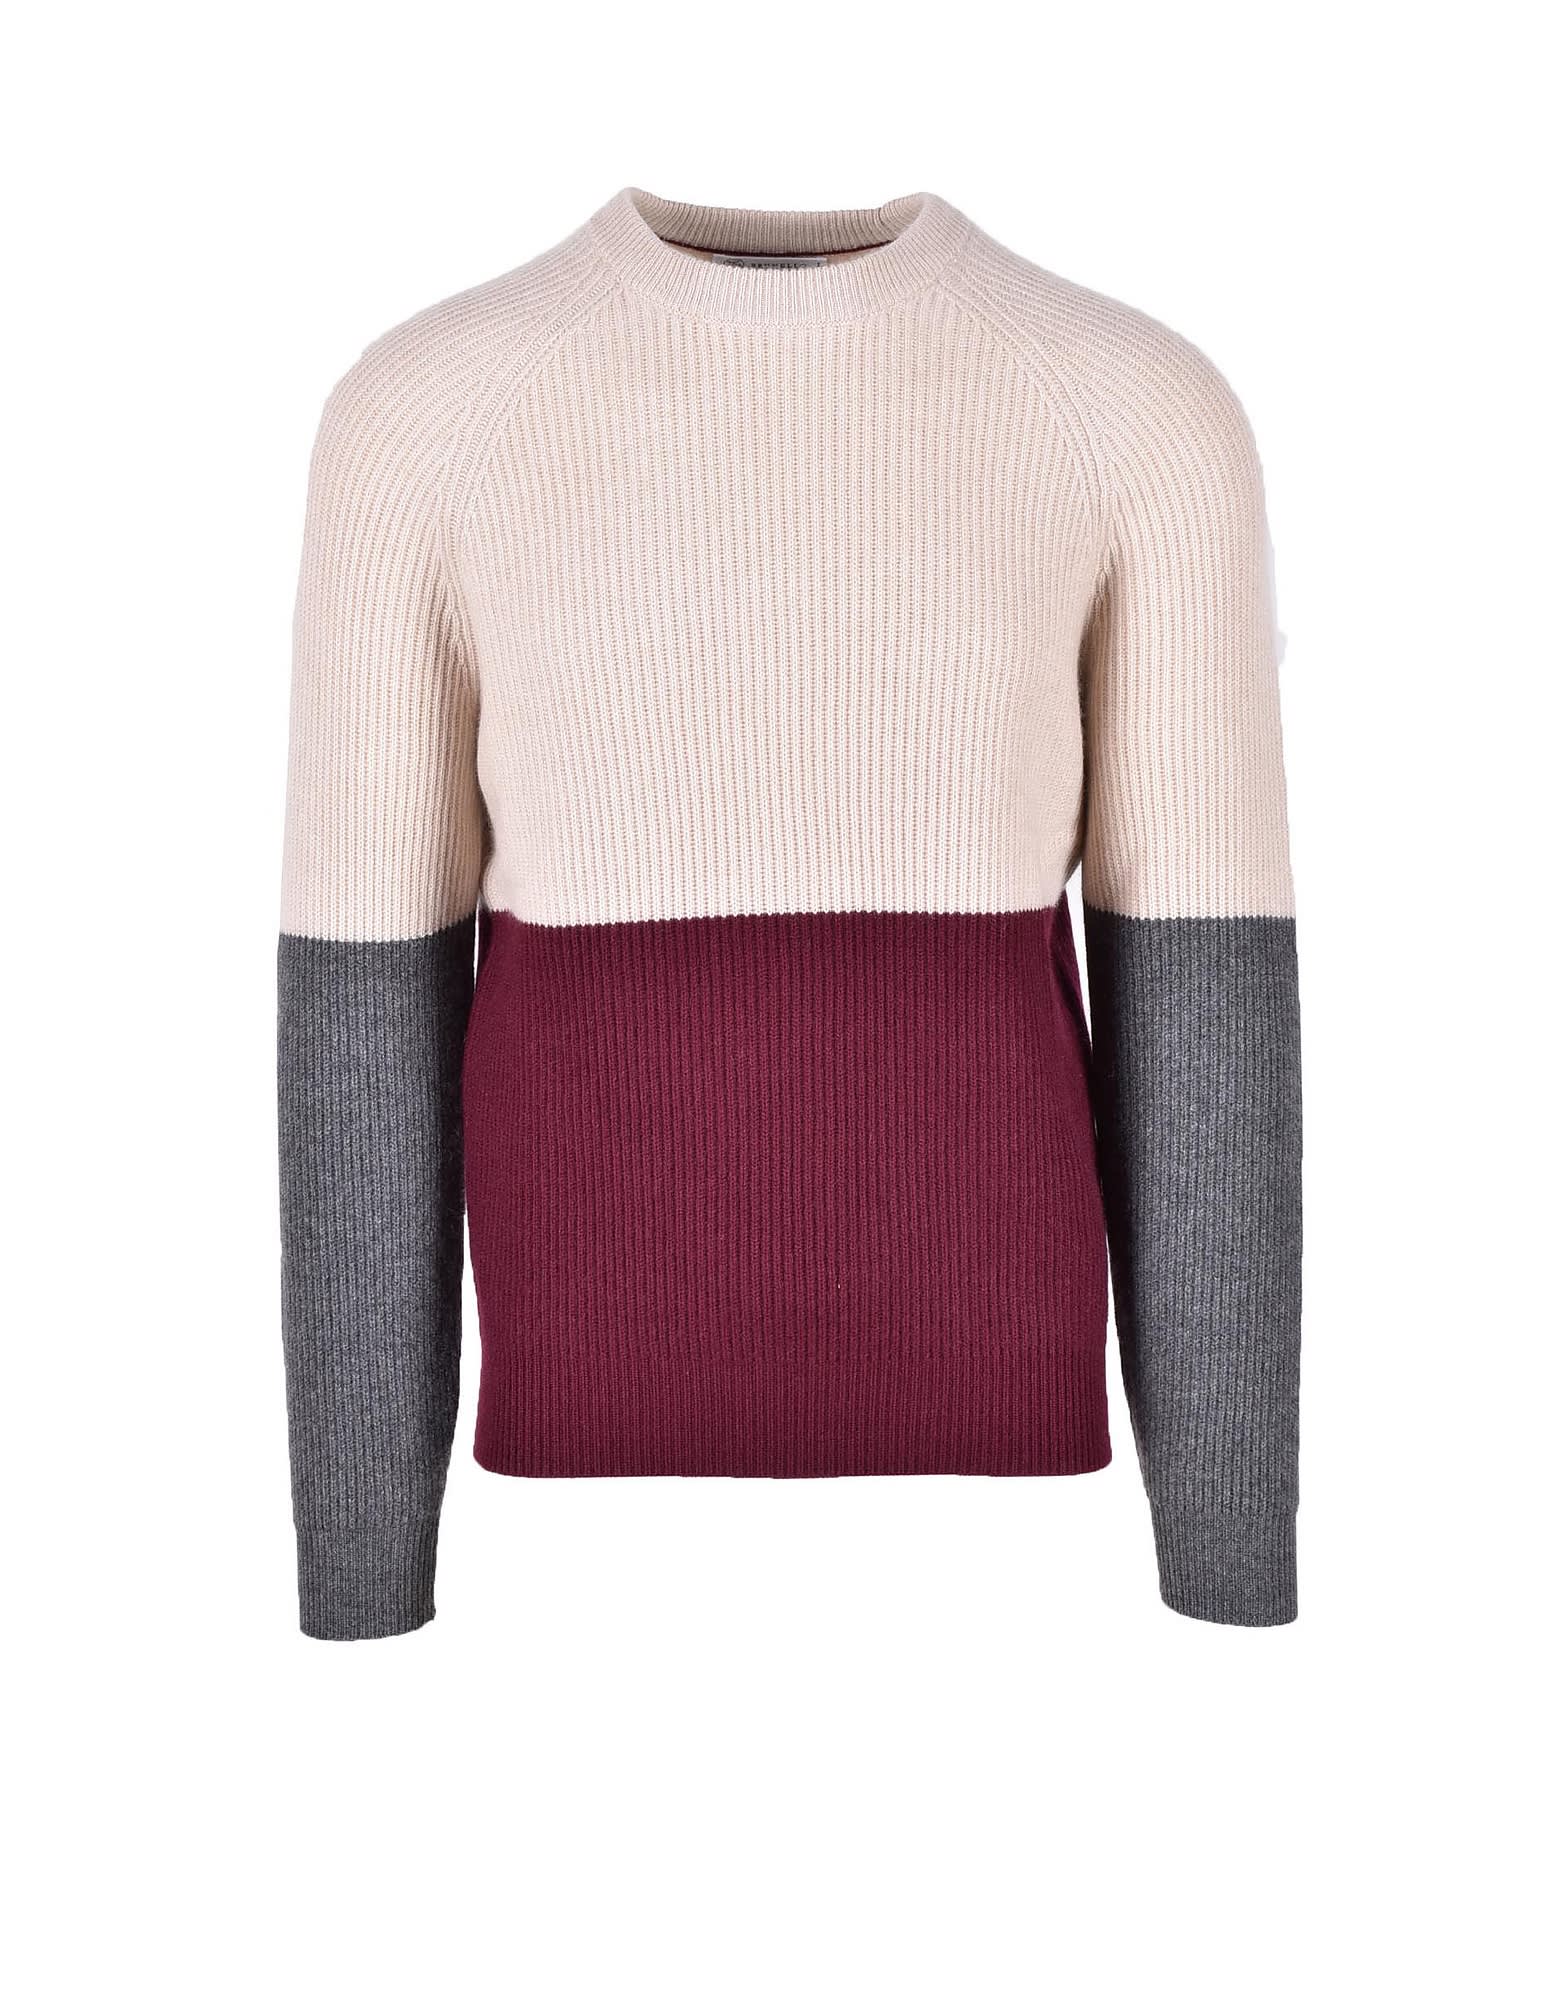 Brunello Cucinelli Mens Beige / Bordeaux Sweater